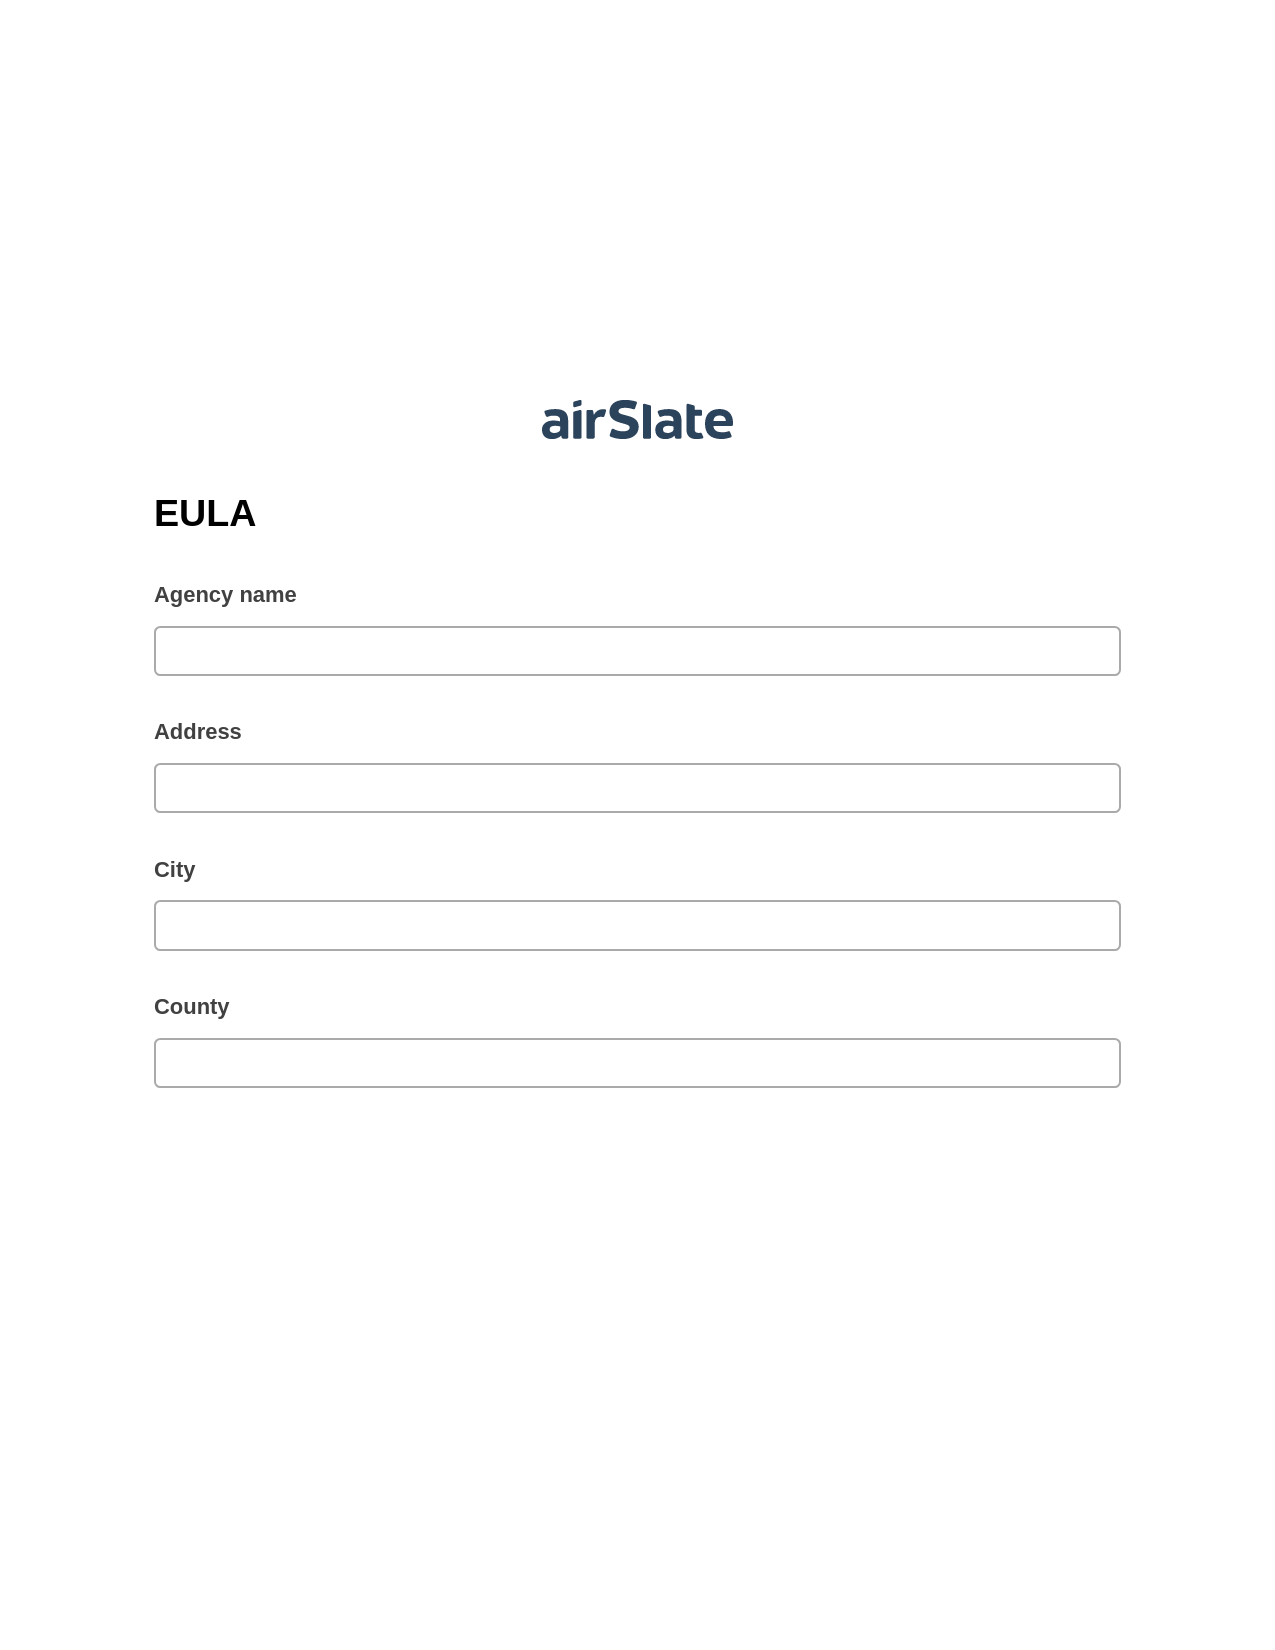 EULA Pre-fill from Google Sheets Bot, Roles Reminder Bot, Webhook Postfinish Bot